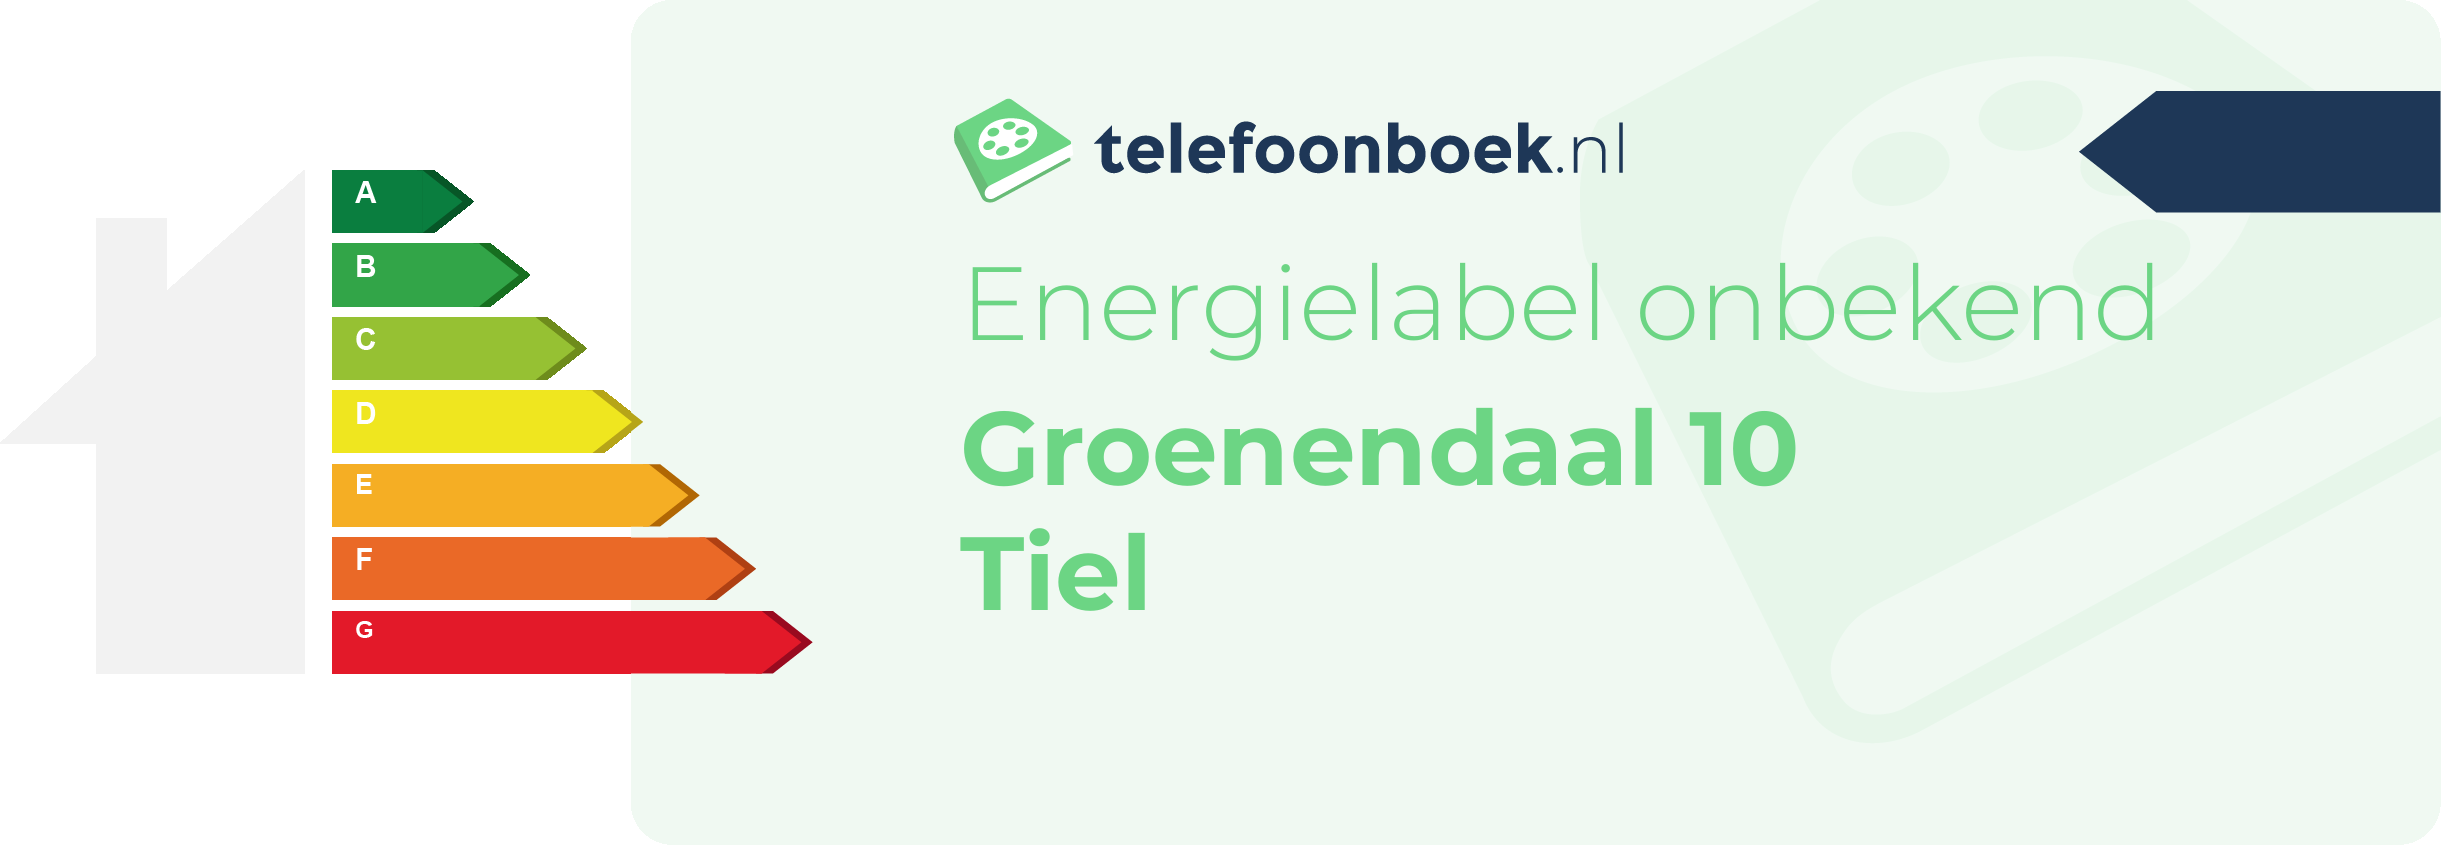 Energielabel Groenendaal 10 Tiel